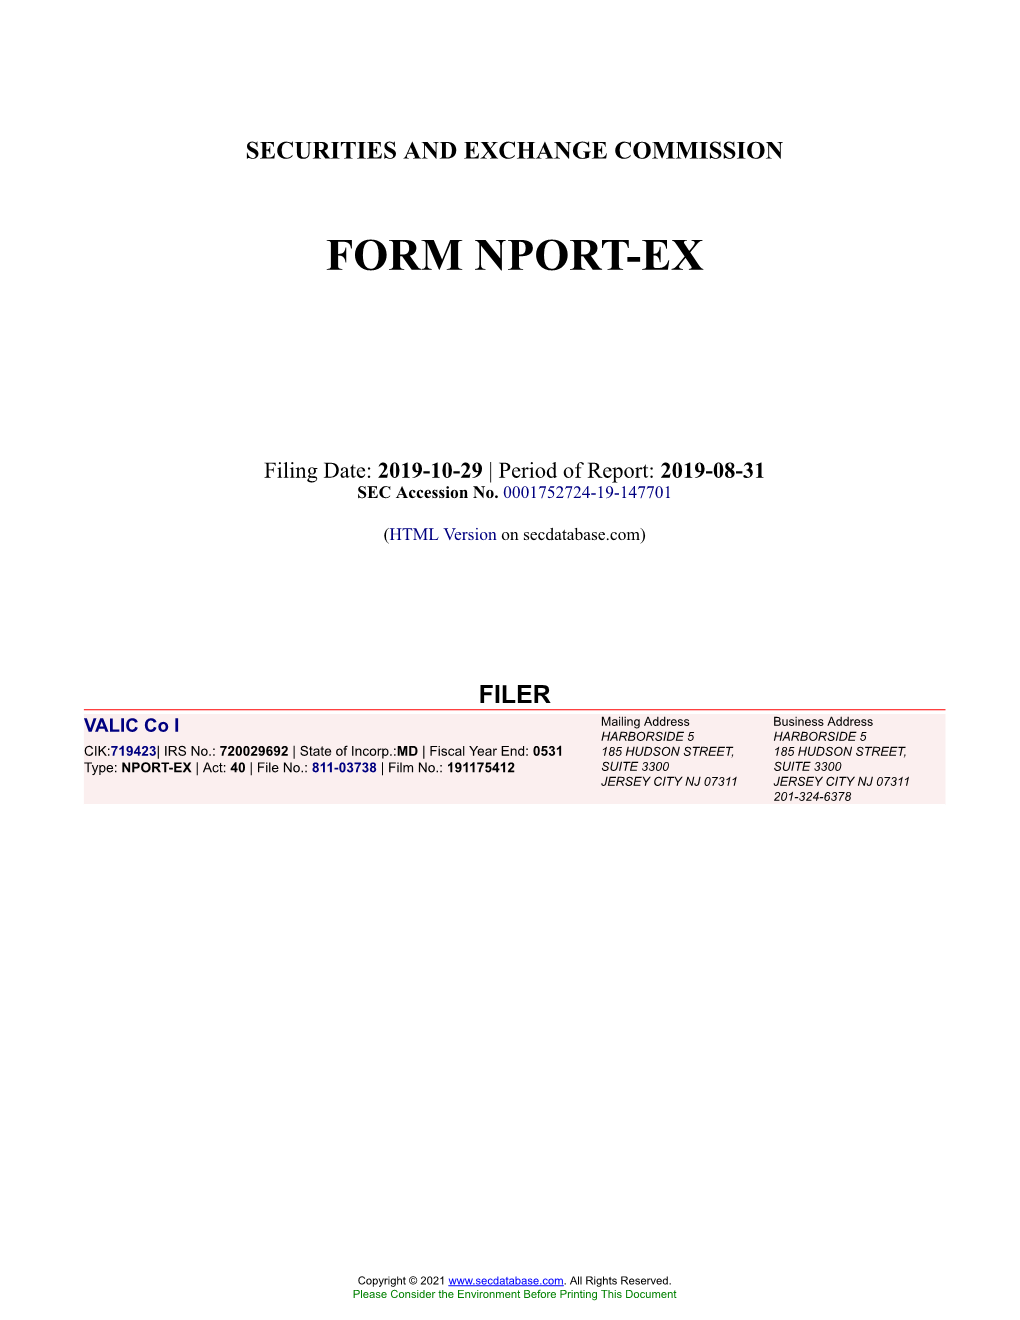 VALIC Co I Form NPORT-EX Filed 2019-10-29